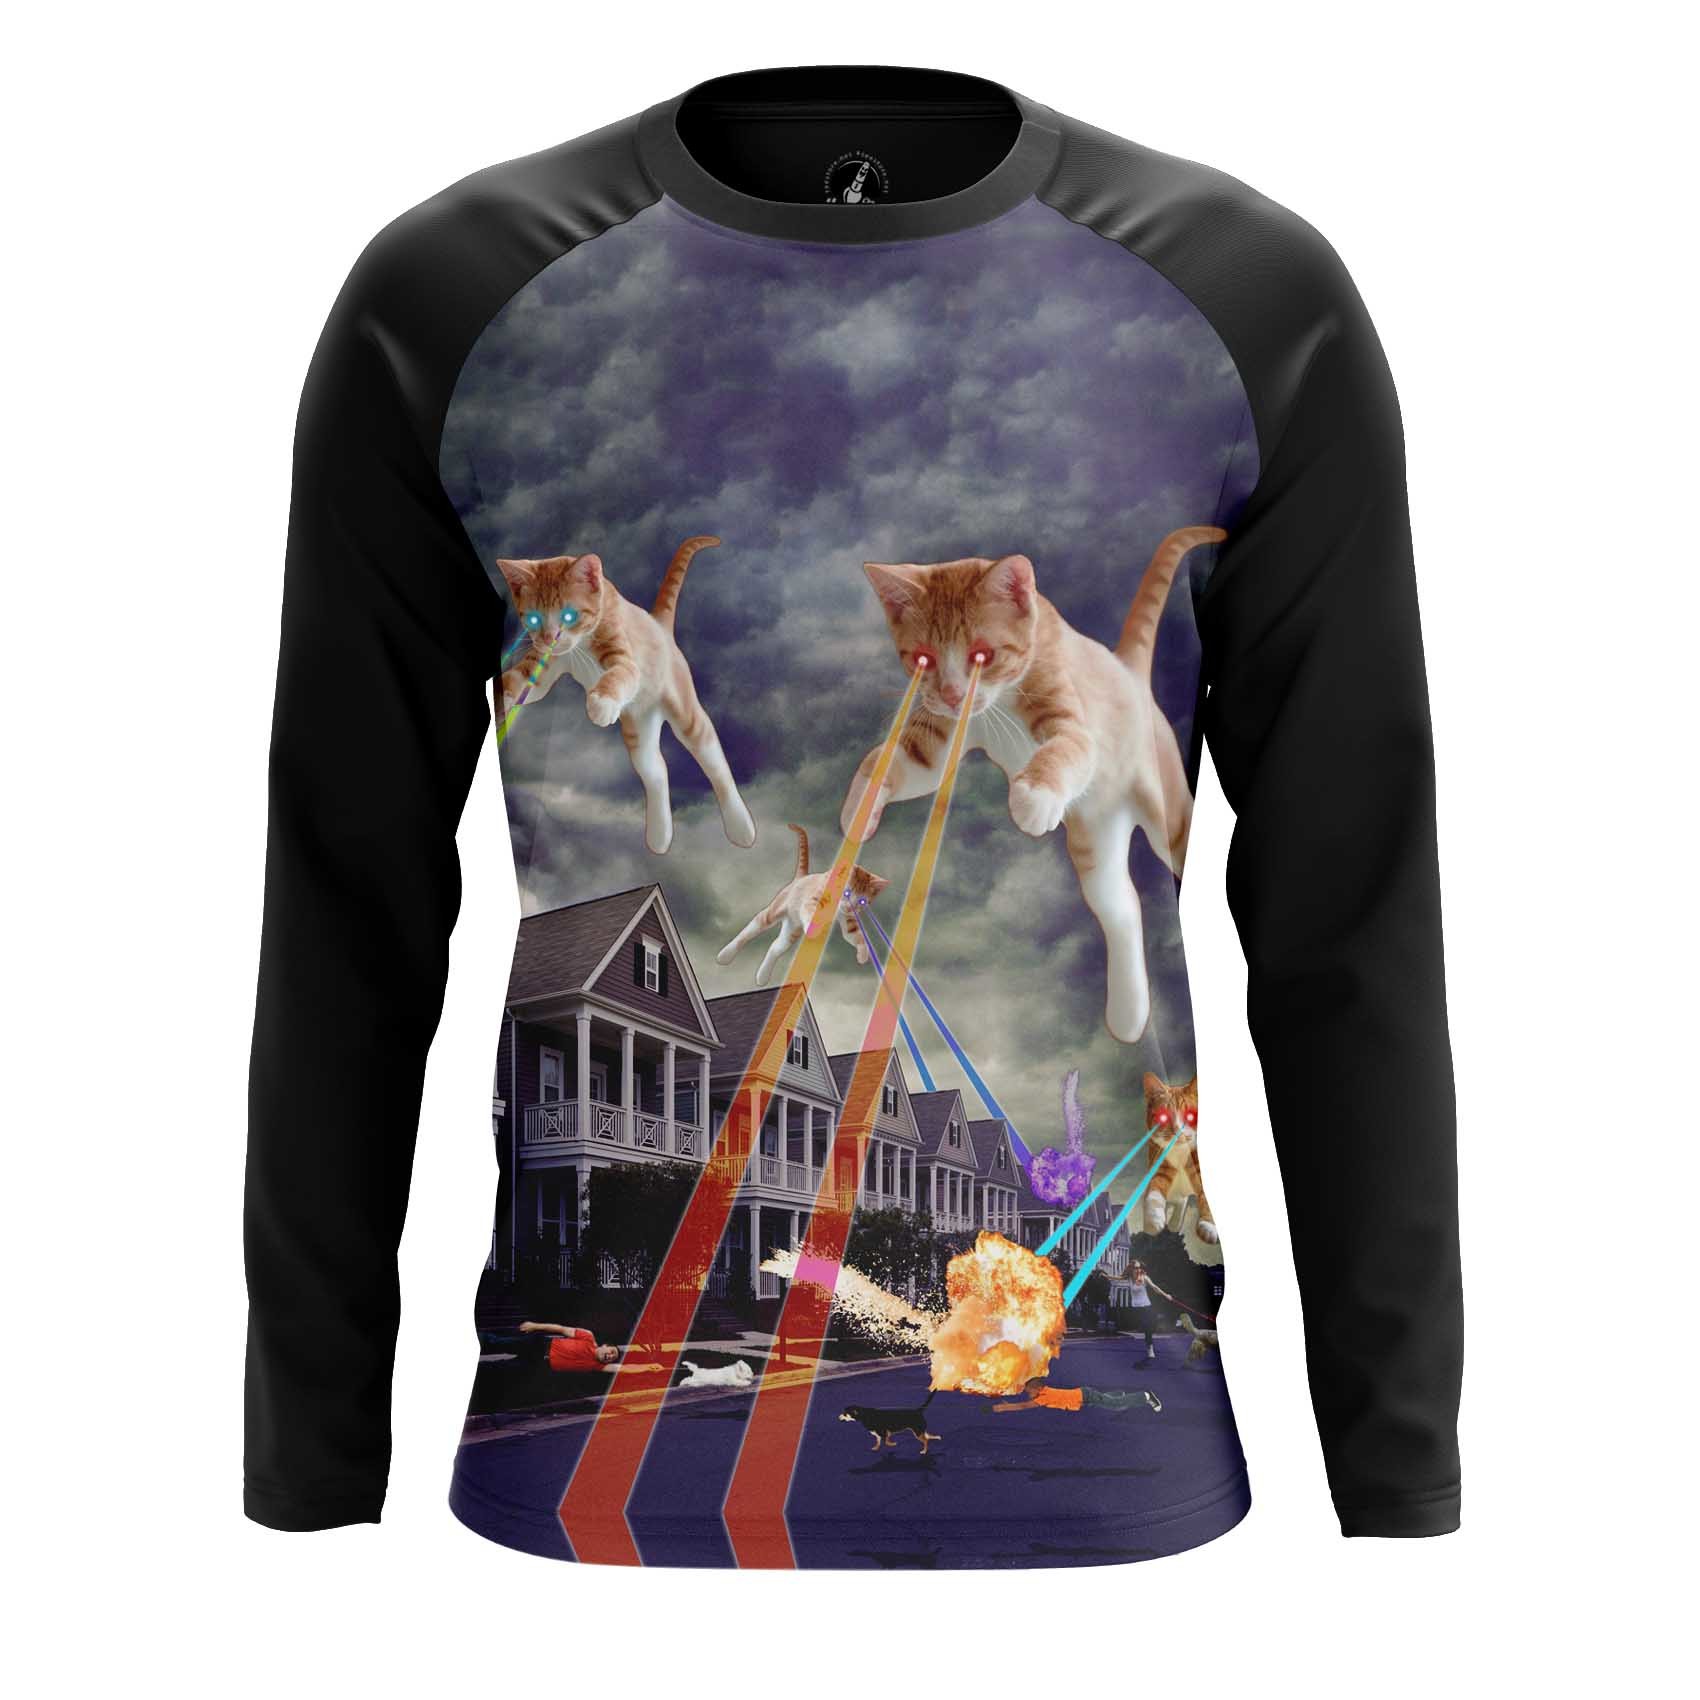 Collectibles Men'S T-Shirt Cat Invasion Fun Kittens